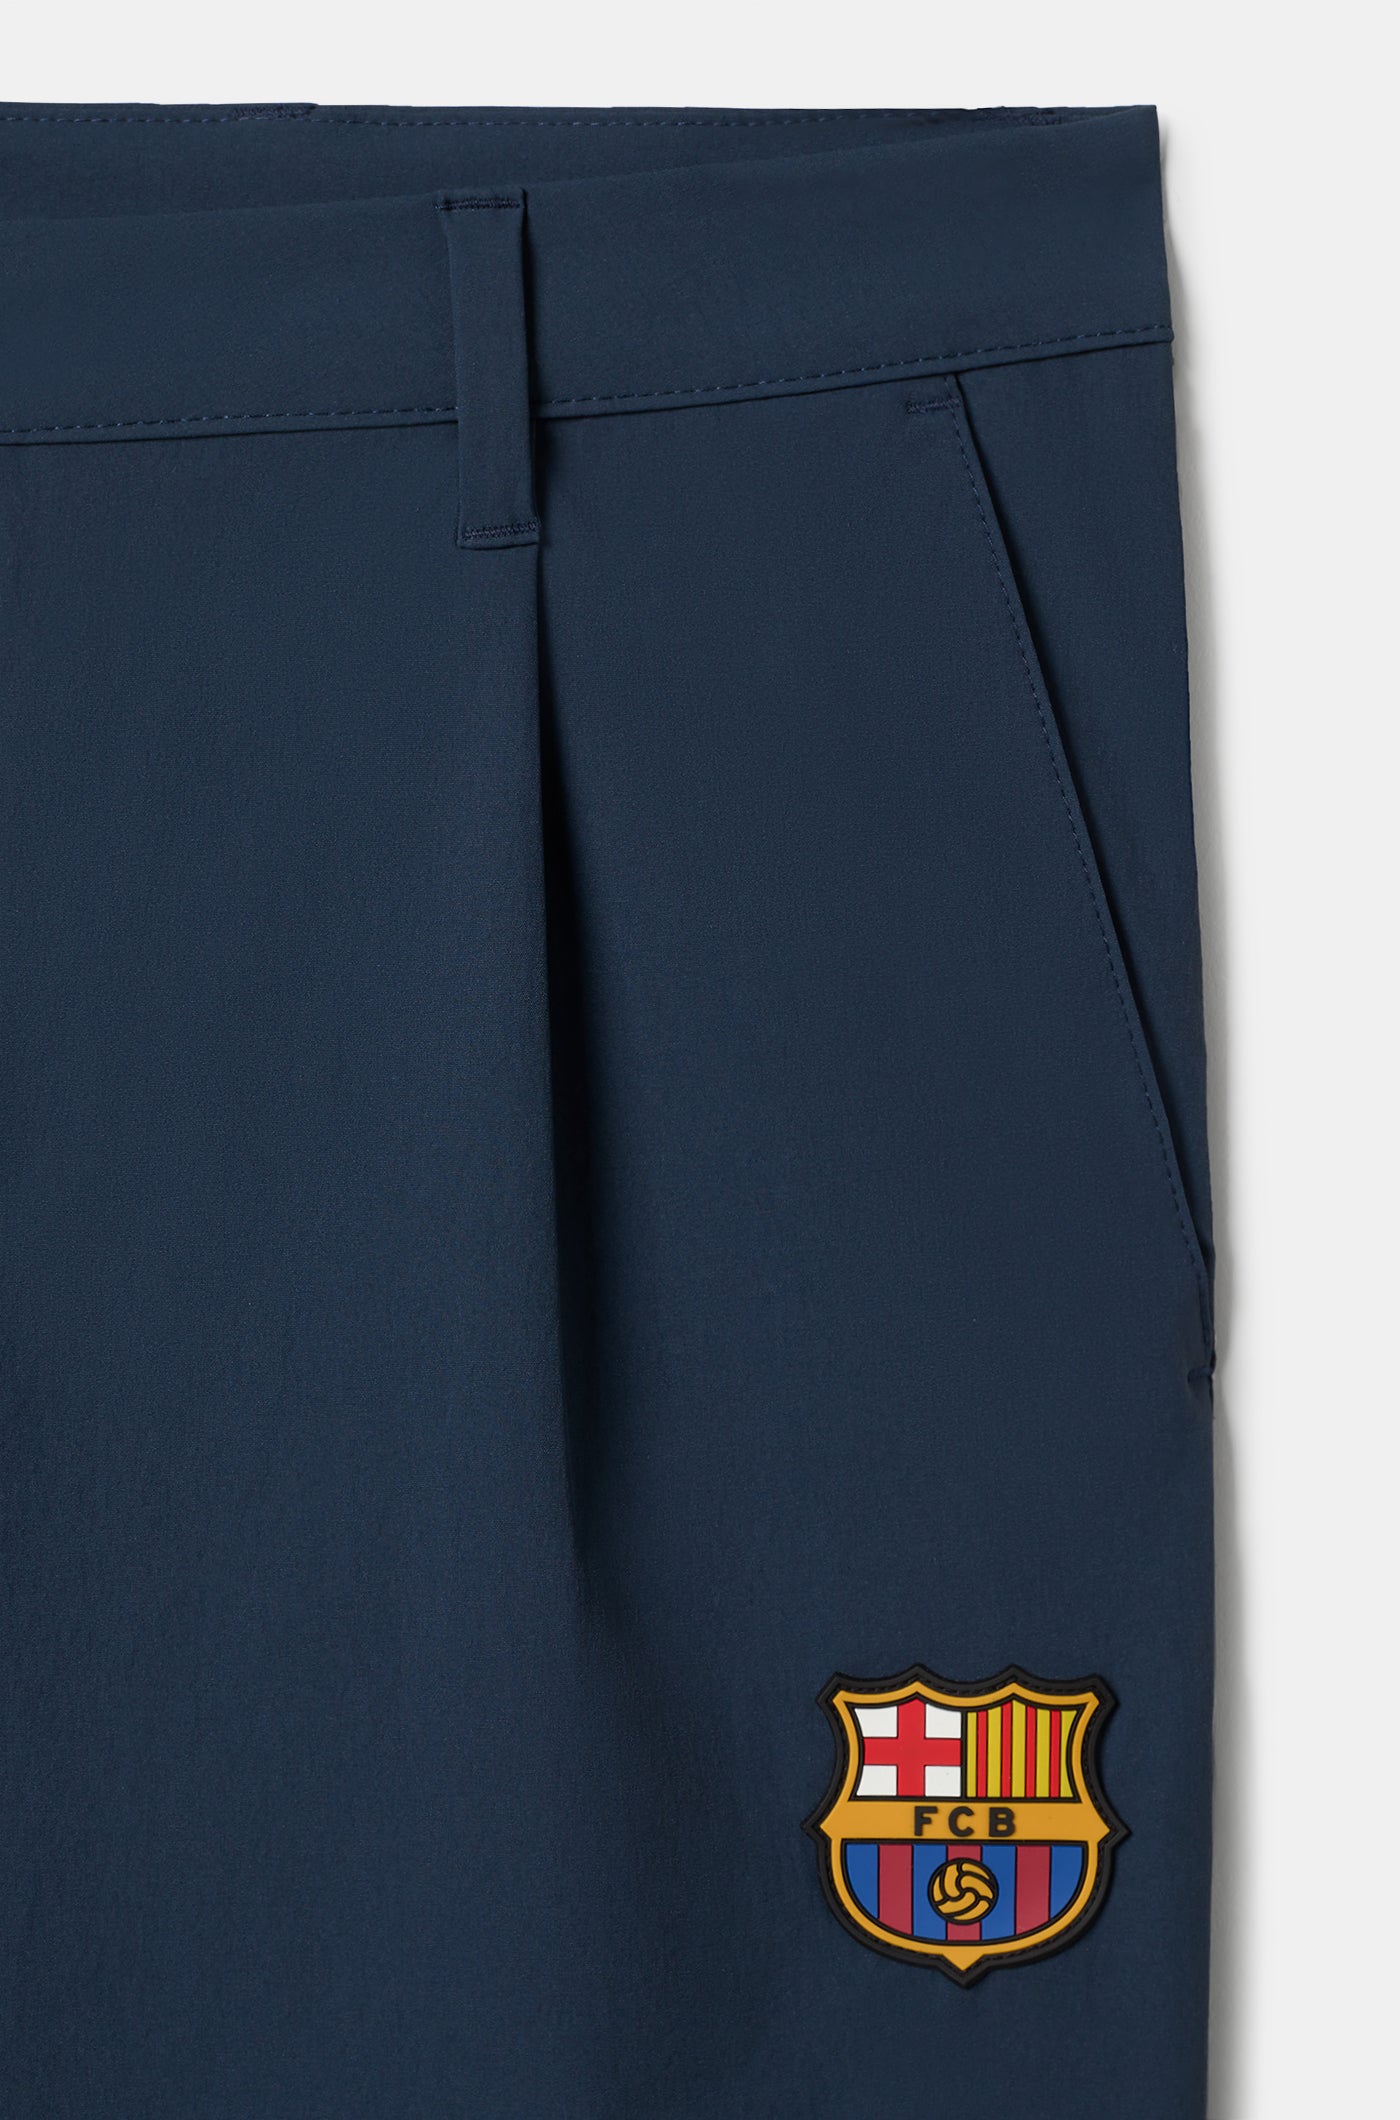 Pantalón azul marino Barça